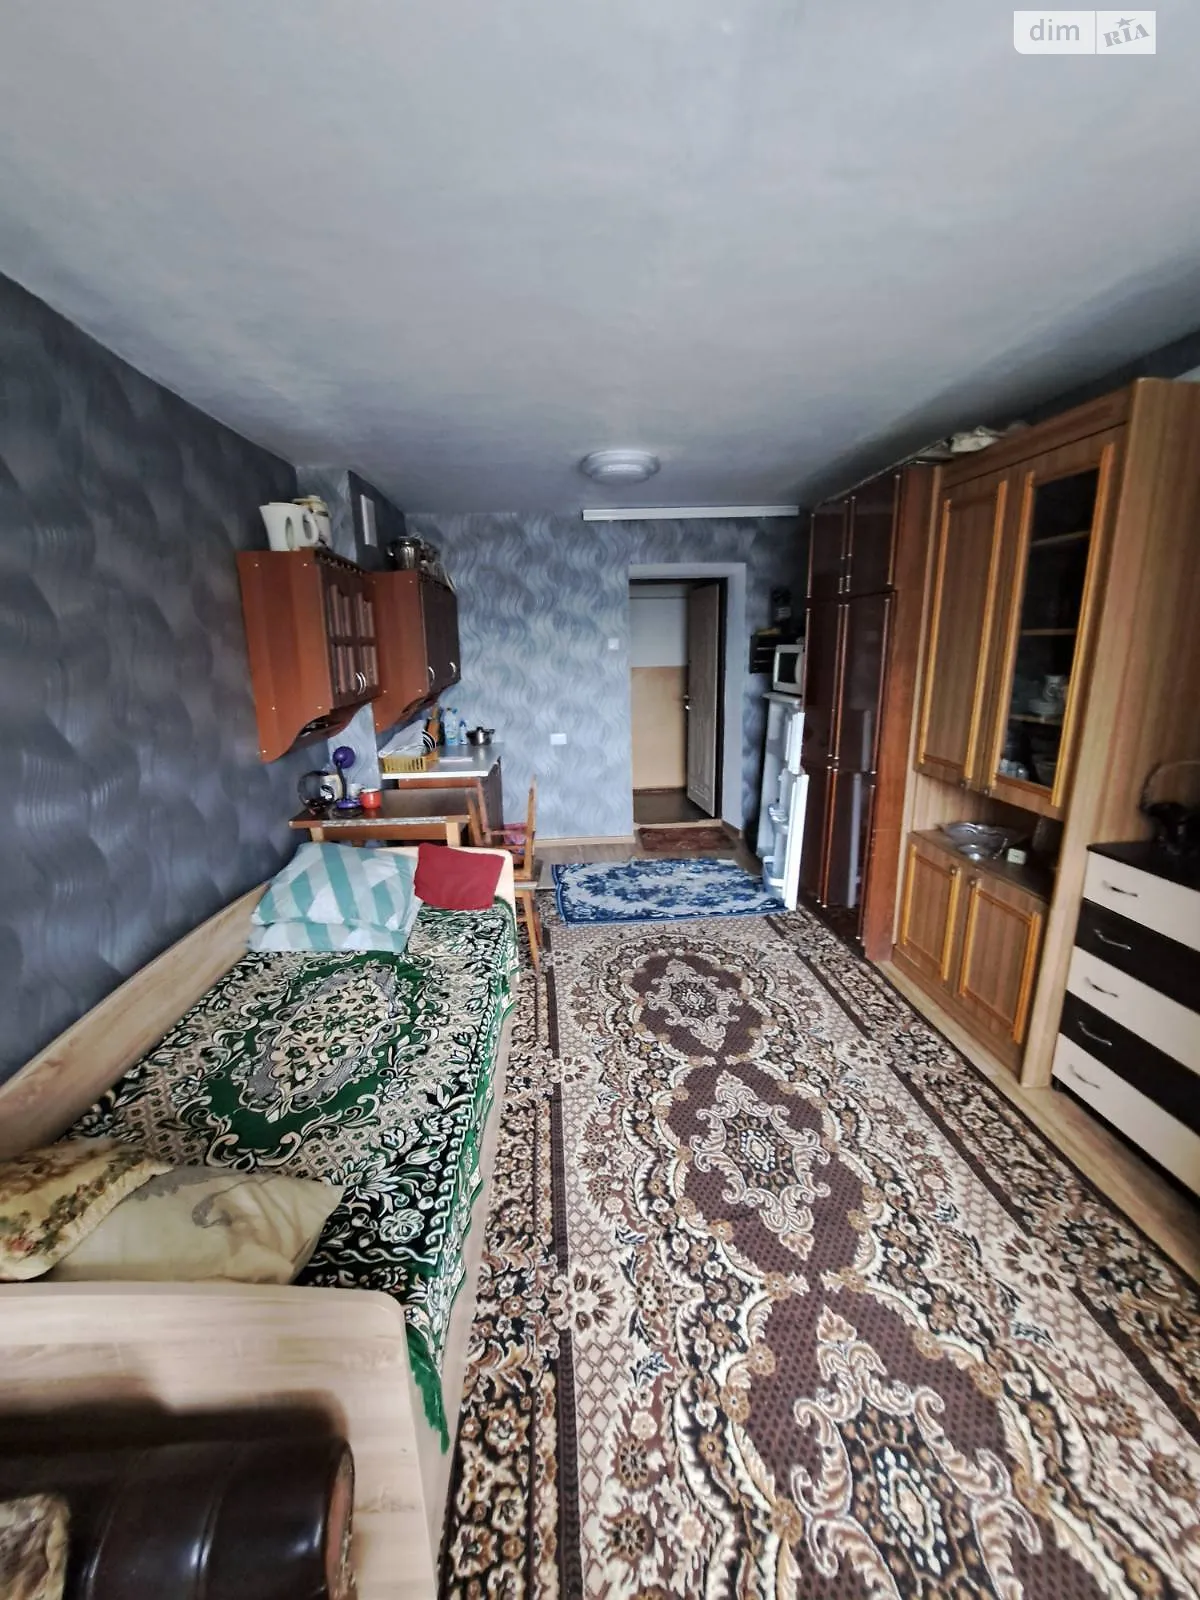 Продается комната 17.8 кв. м в Николаеве - фото 2